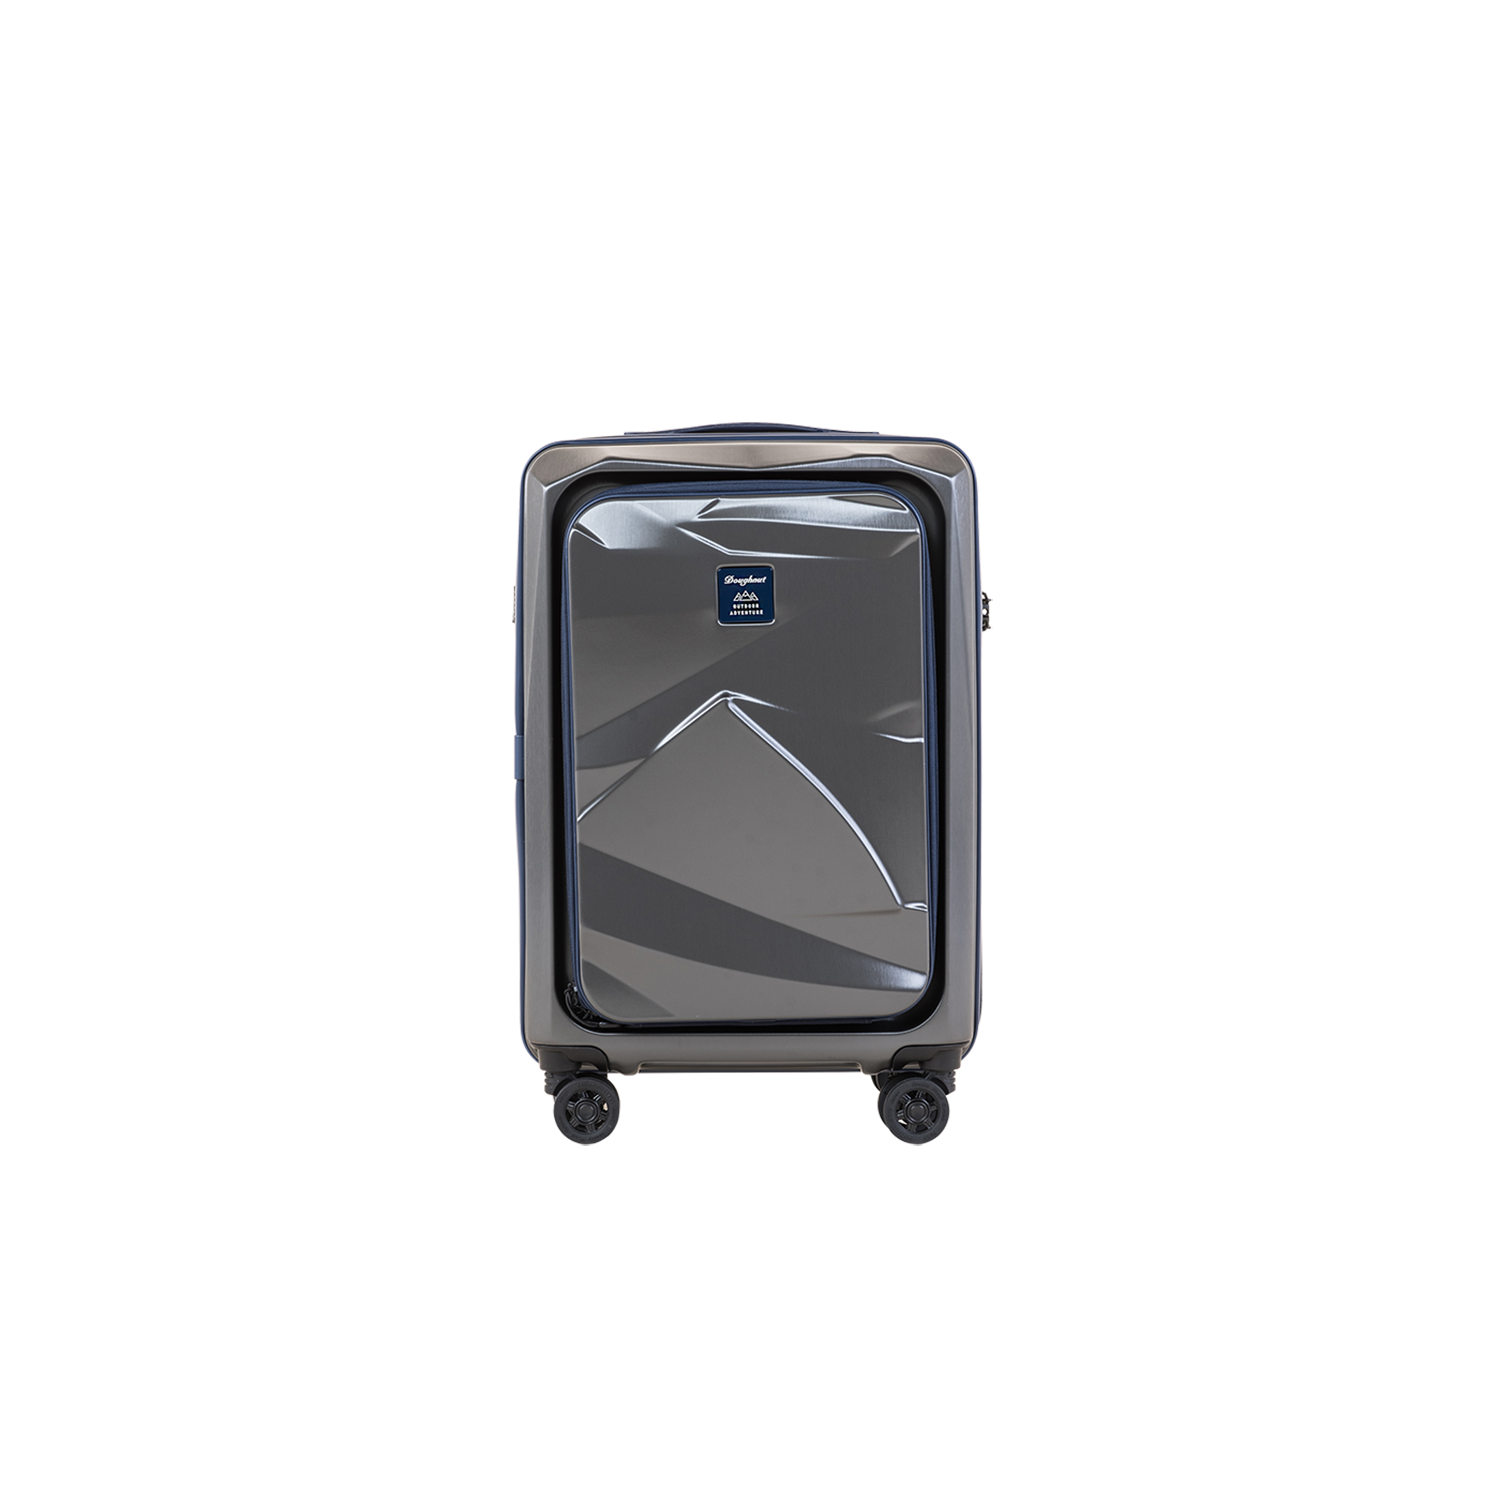 Alpine Luggage Small